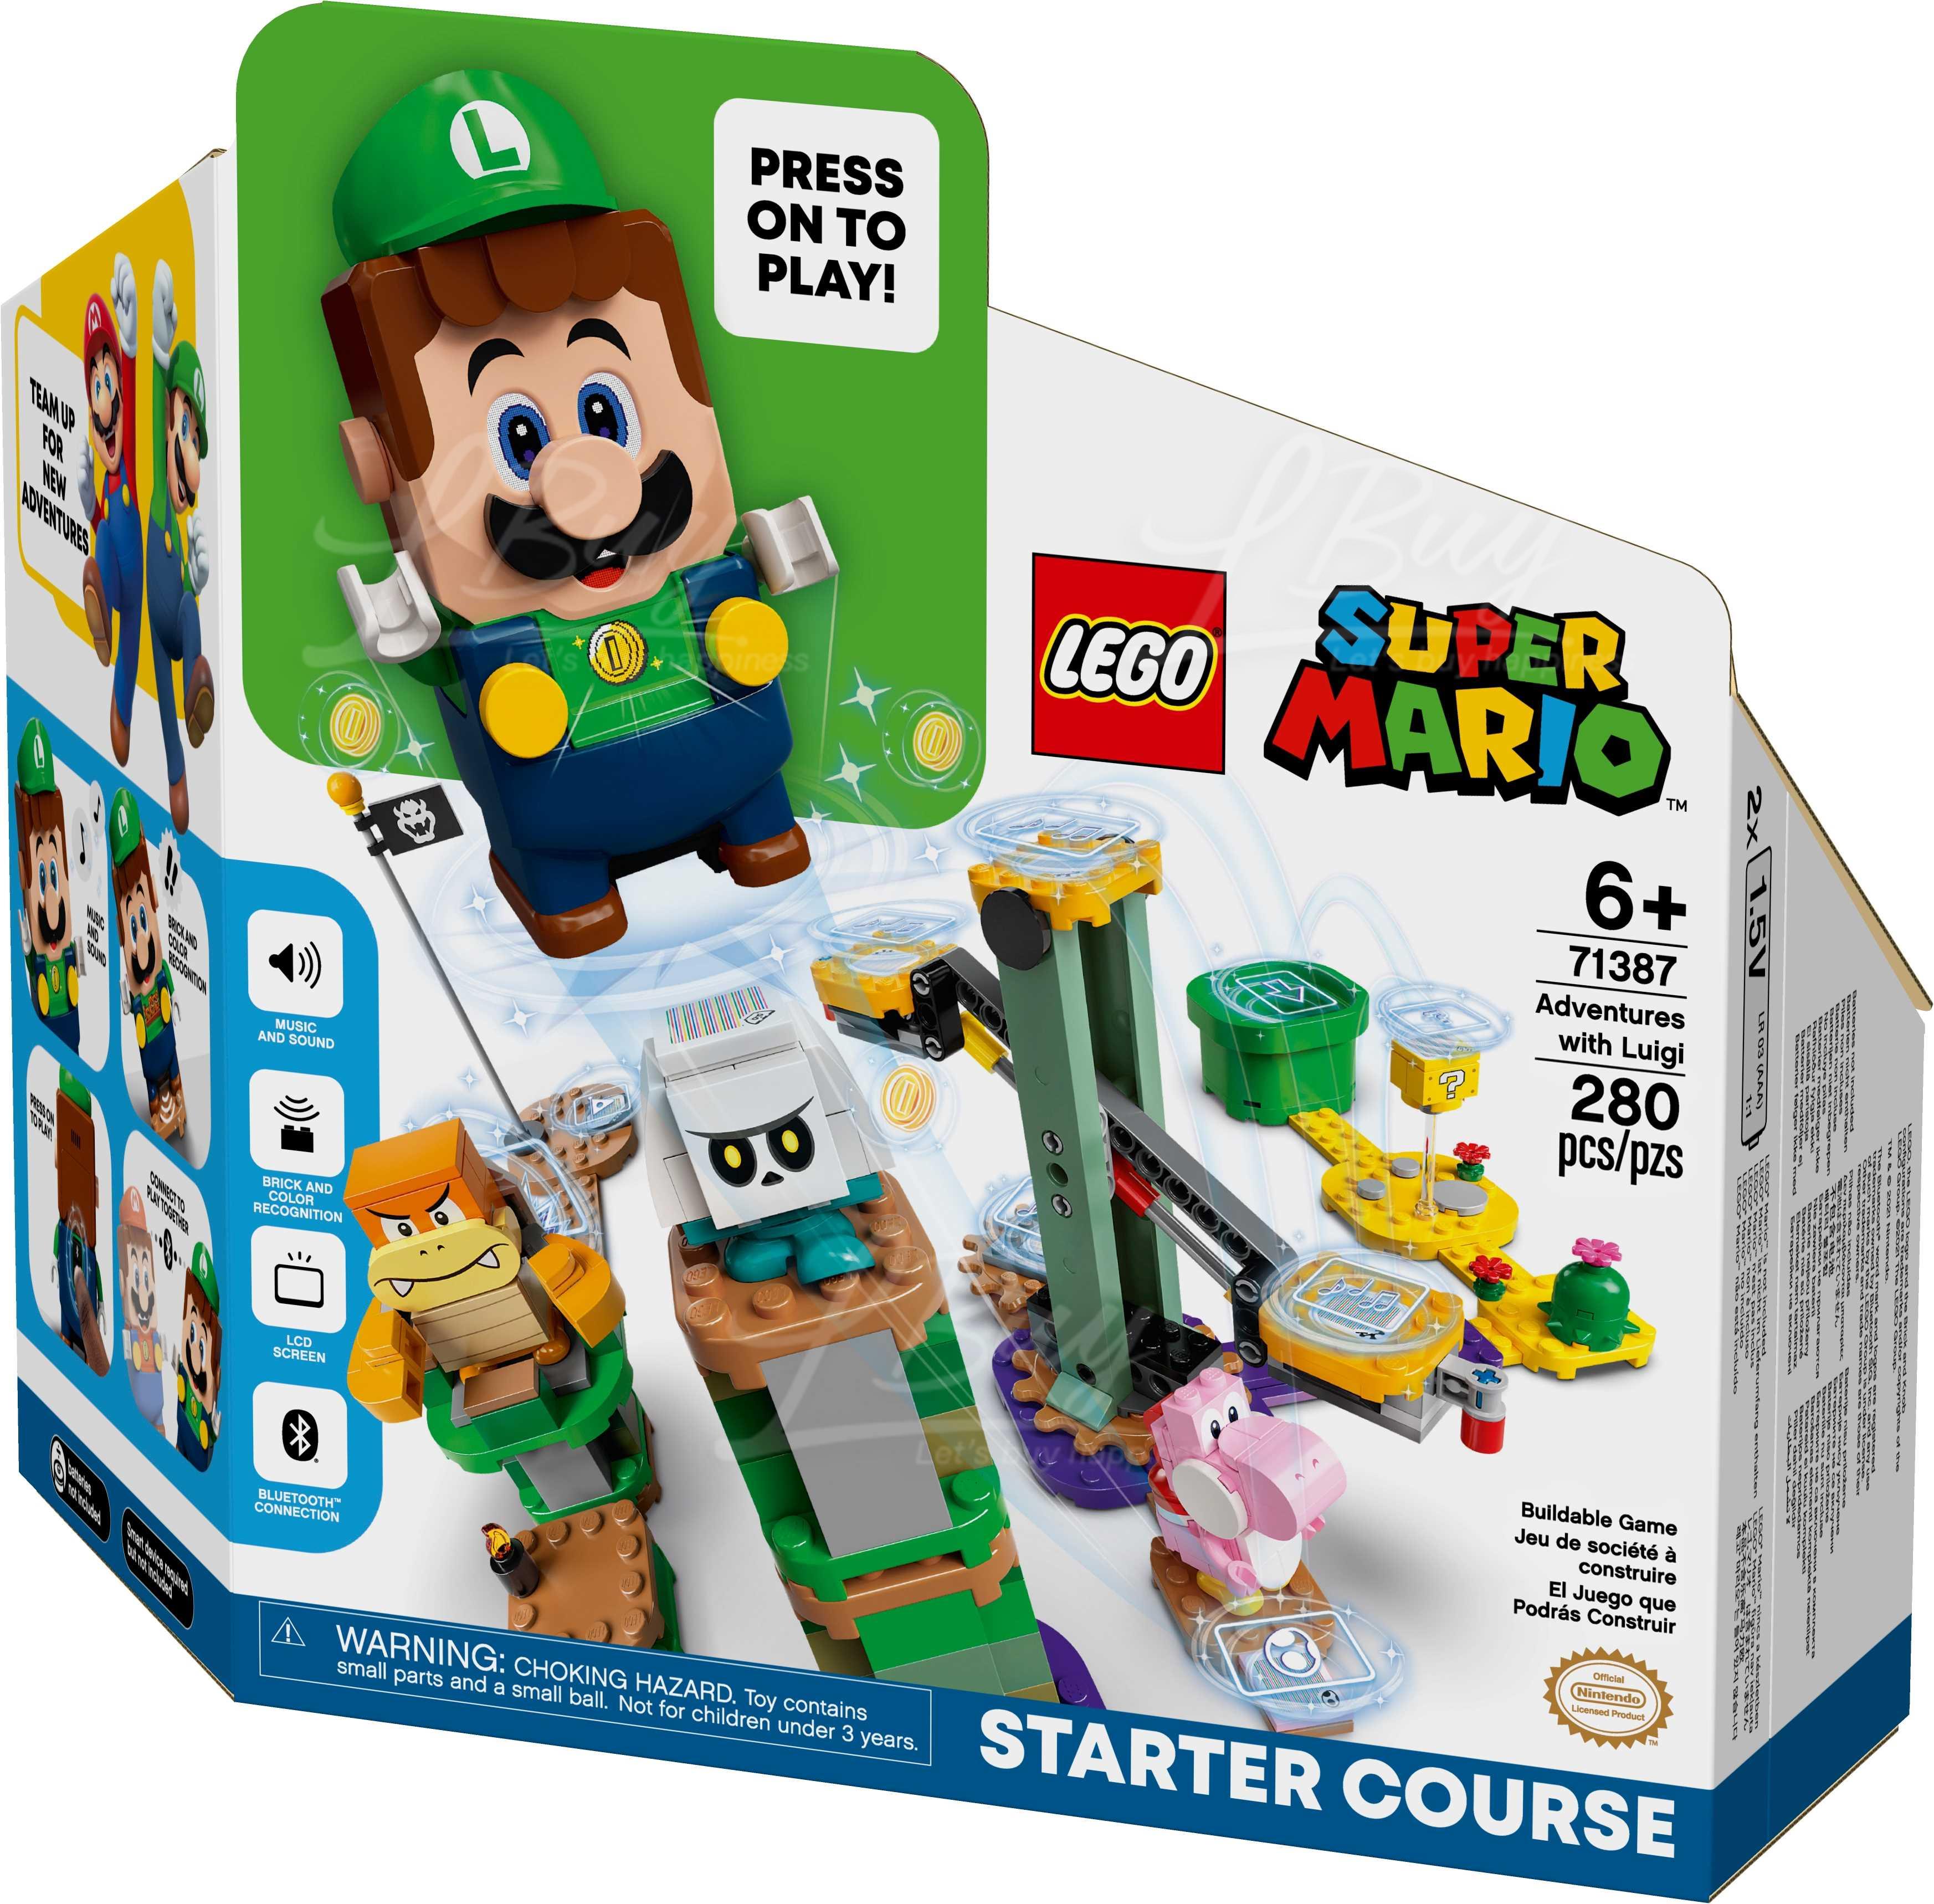 LEGO 71387 Super Mario™ Adventures with Luigi Starter Course 6+